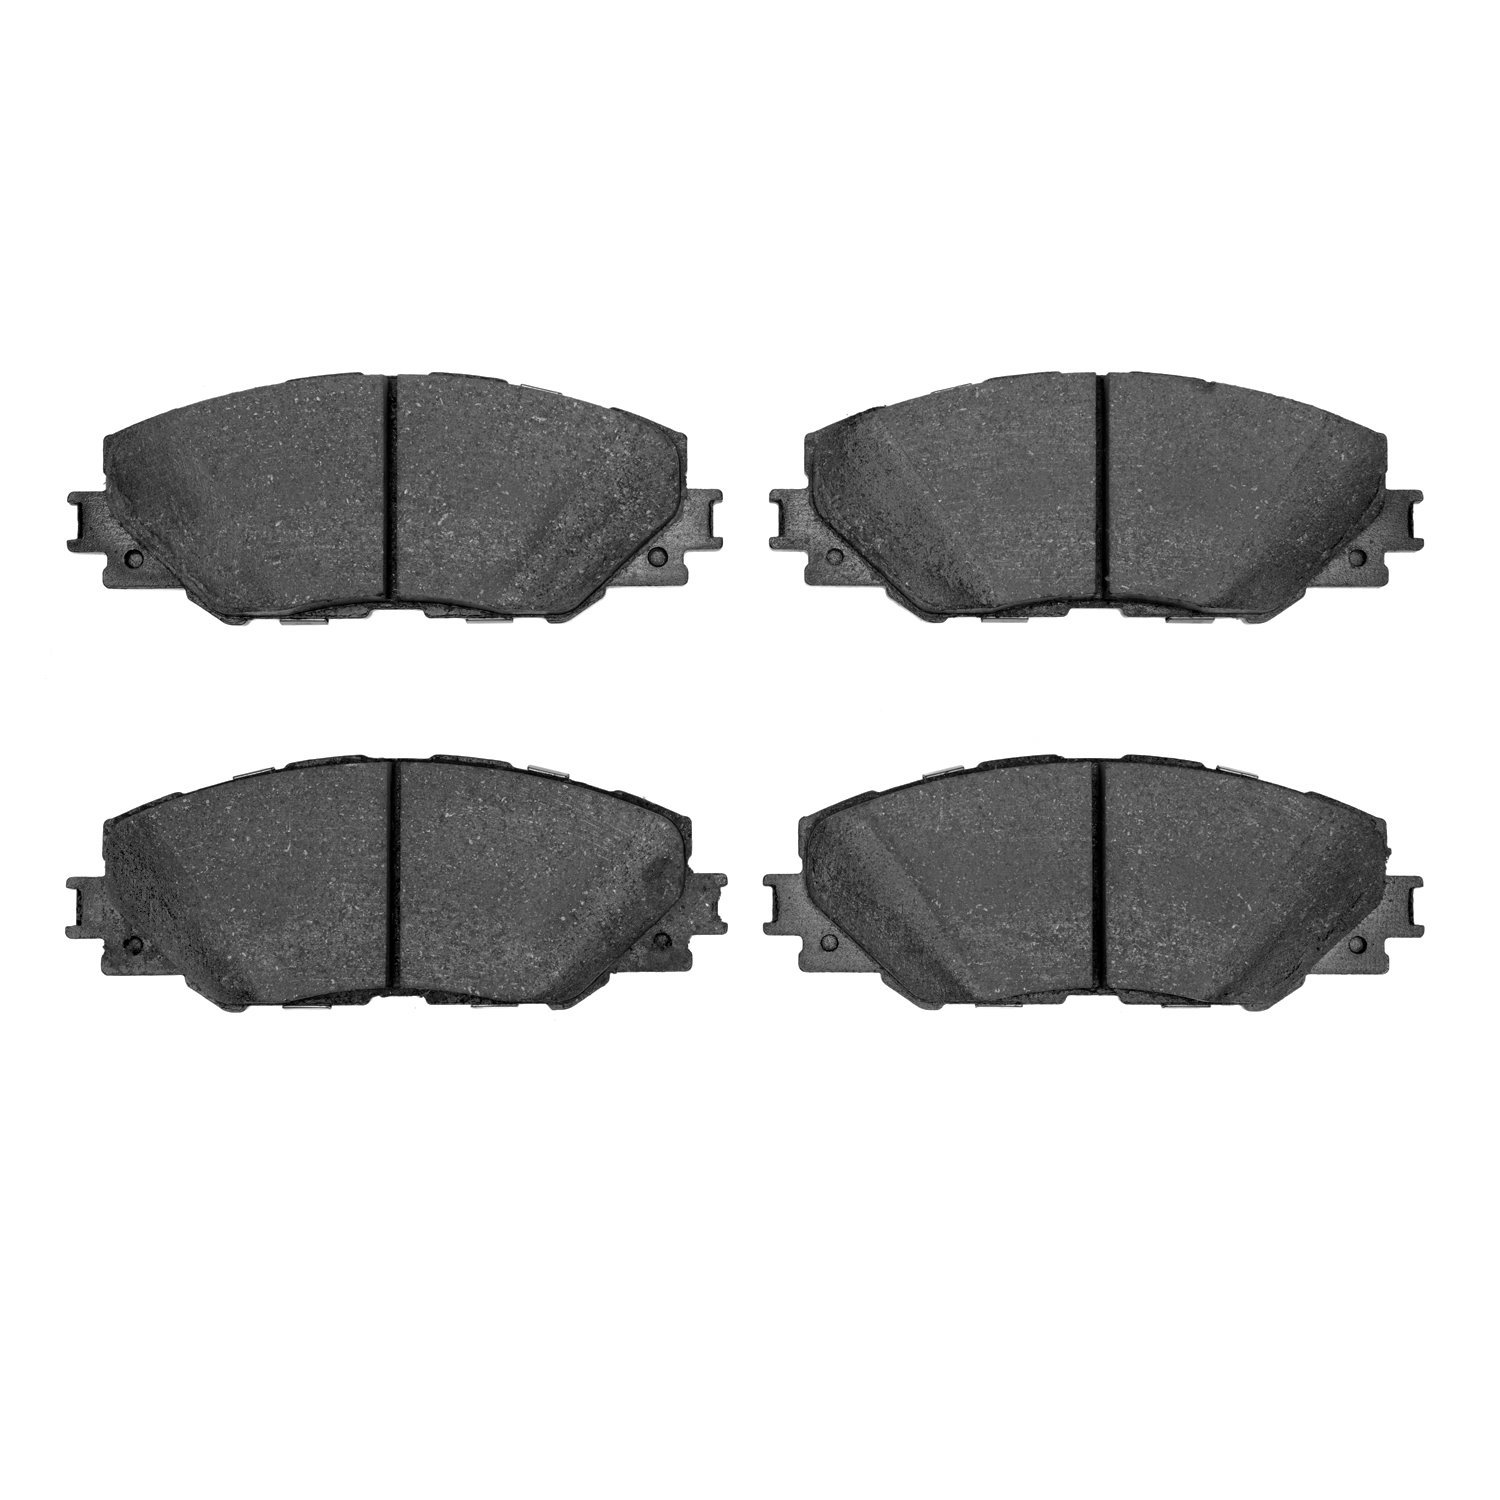 1310-1211-00 3000-Series Ceramic Brake Pads, 2006-2020 Multiple Makes/Models, Position: Front